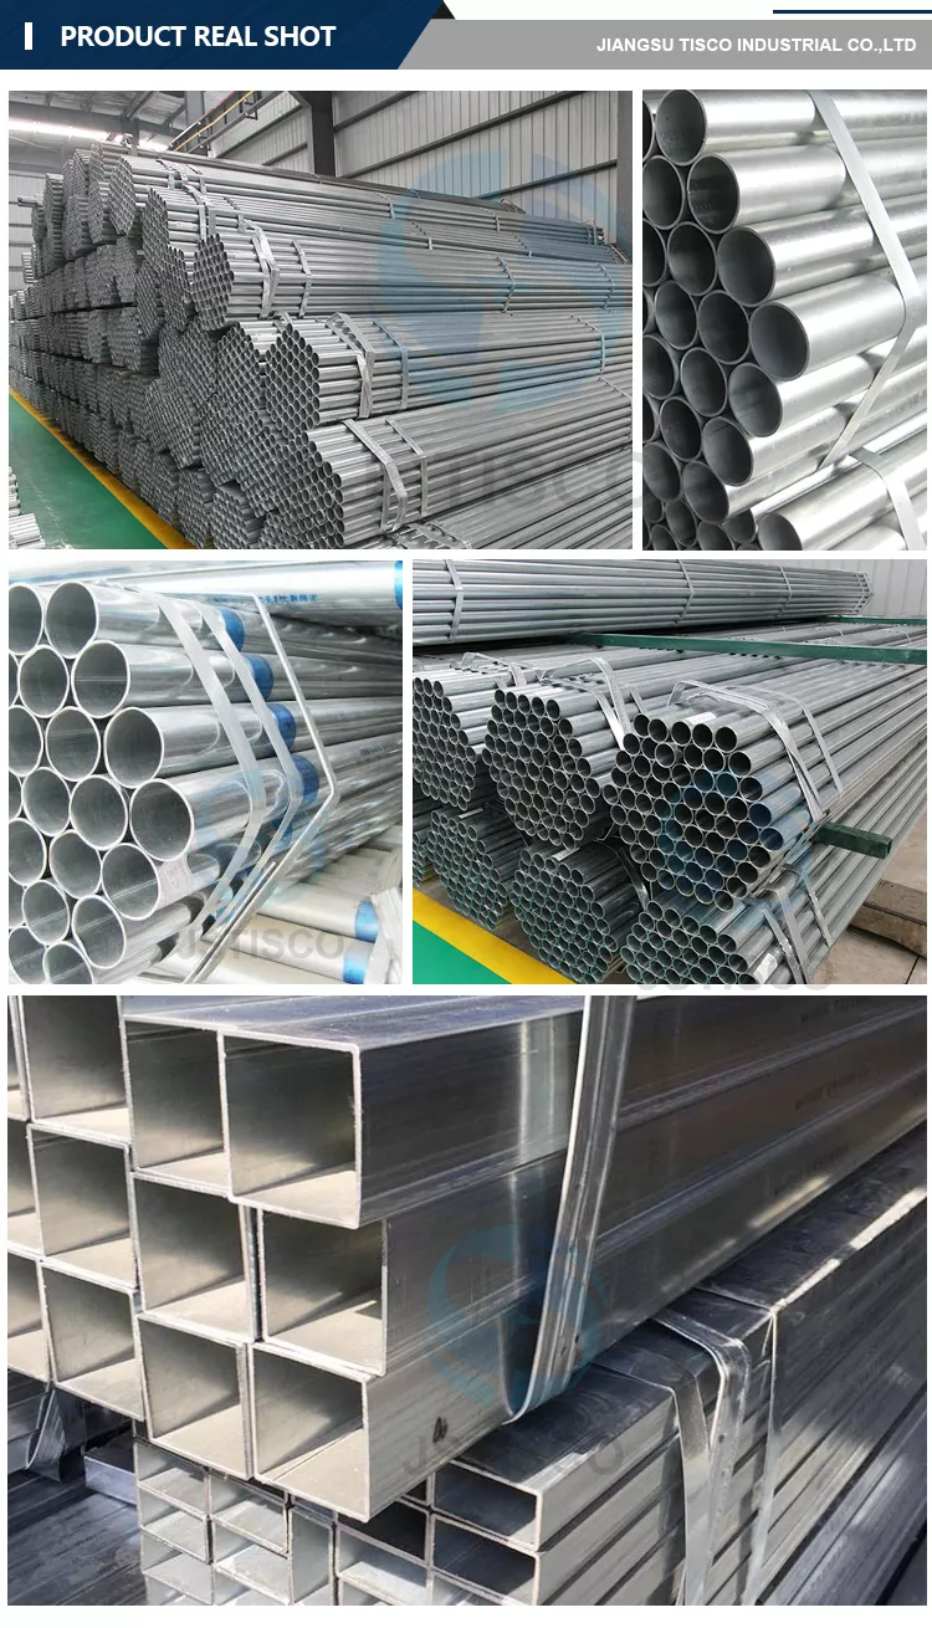 Zinc Coated Carbon Steel Tubes